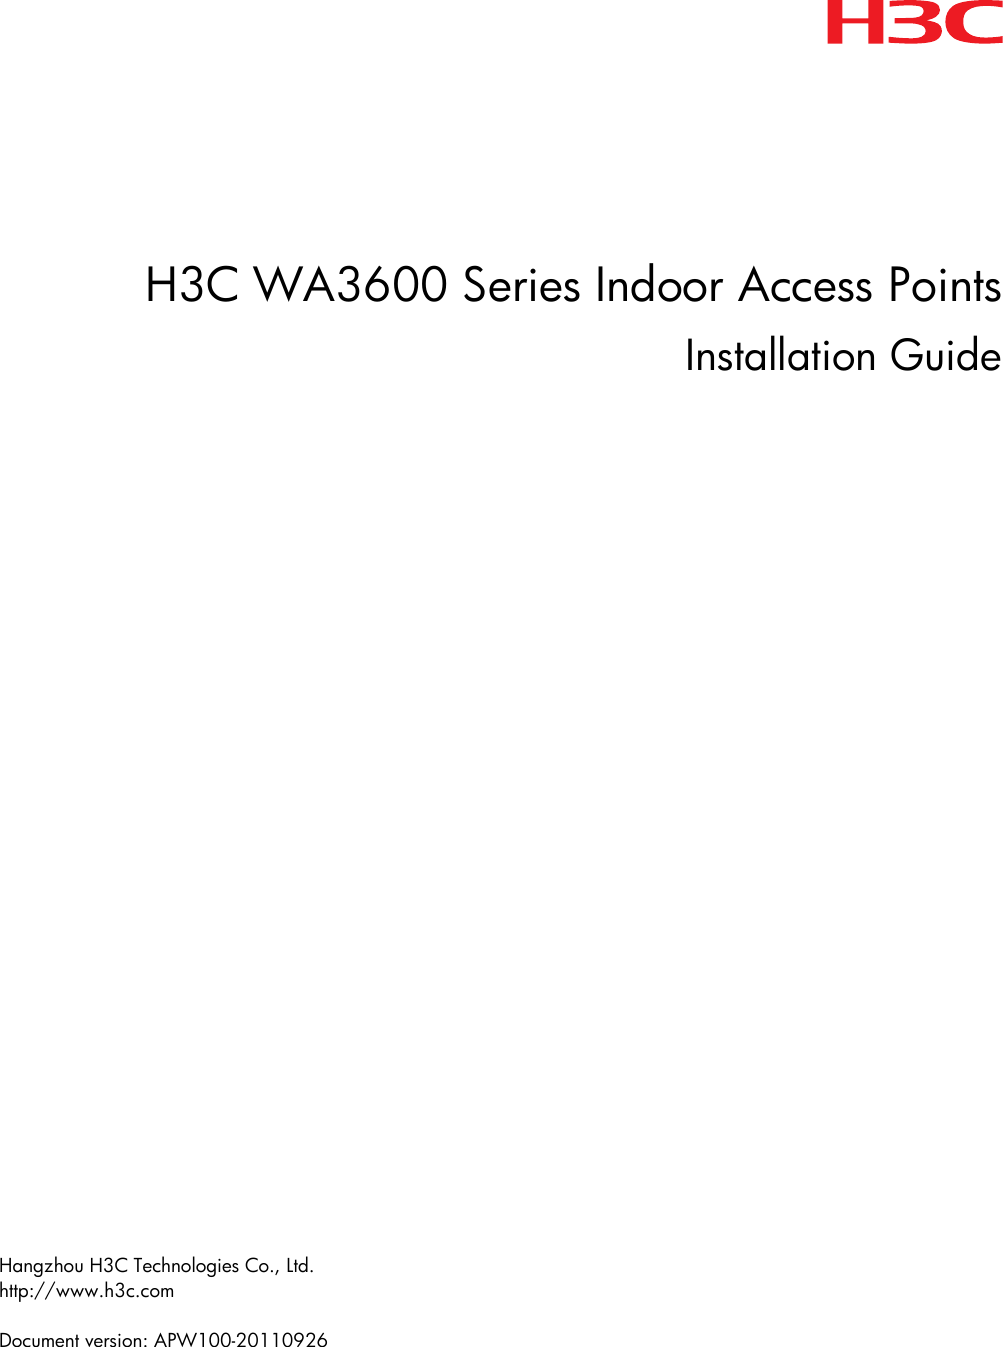 H3C WA3600 Series Indoor Access PointsInstallation Guide                      Hangzhou H3C Technologies Co., Ltd.  http://www.h3c.com  Document version: APW100-20110926 